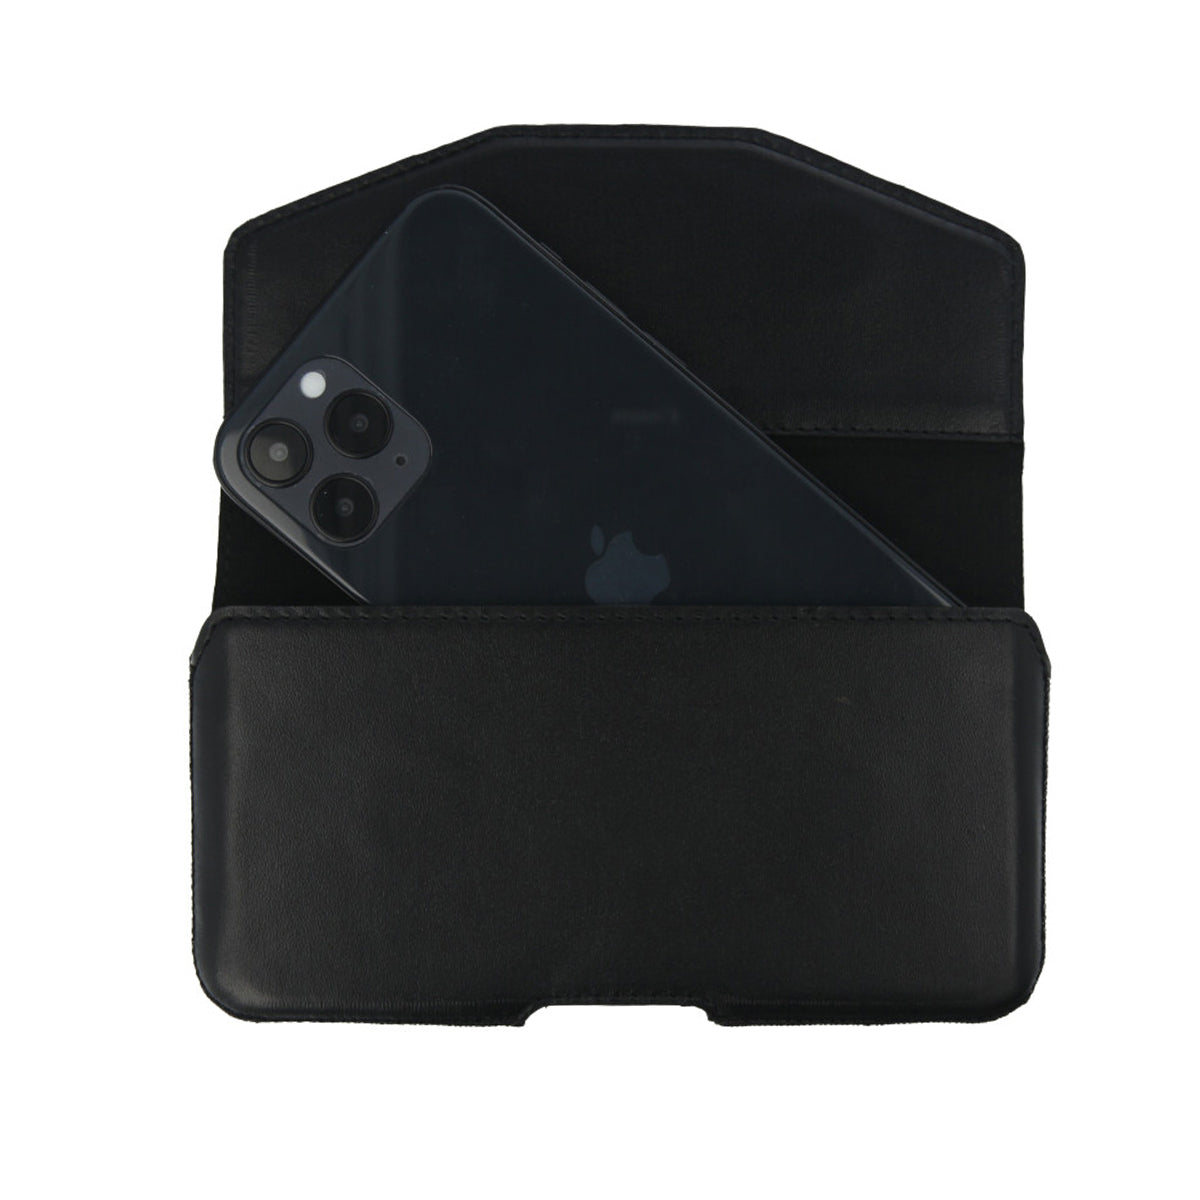 Valenta Trend - Coque Apple iPhone 13 Pro Max Coque Arrière Rigide  Compatible MagSafe - Violet 7-587907 